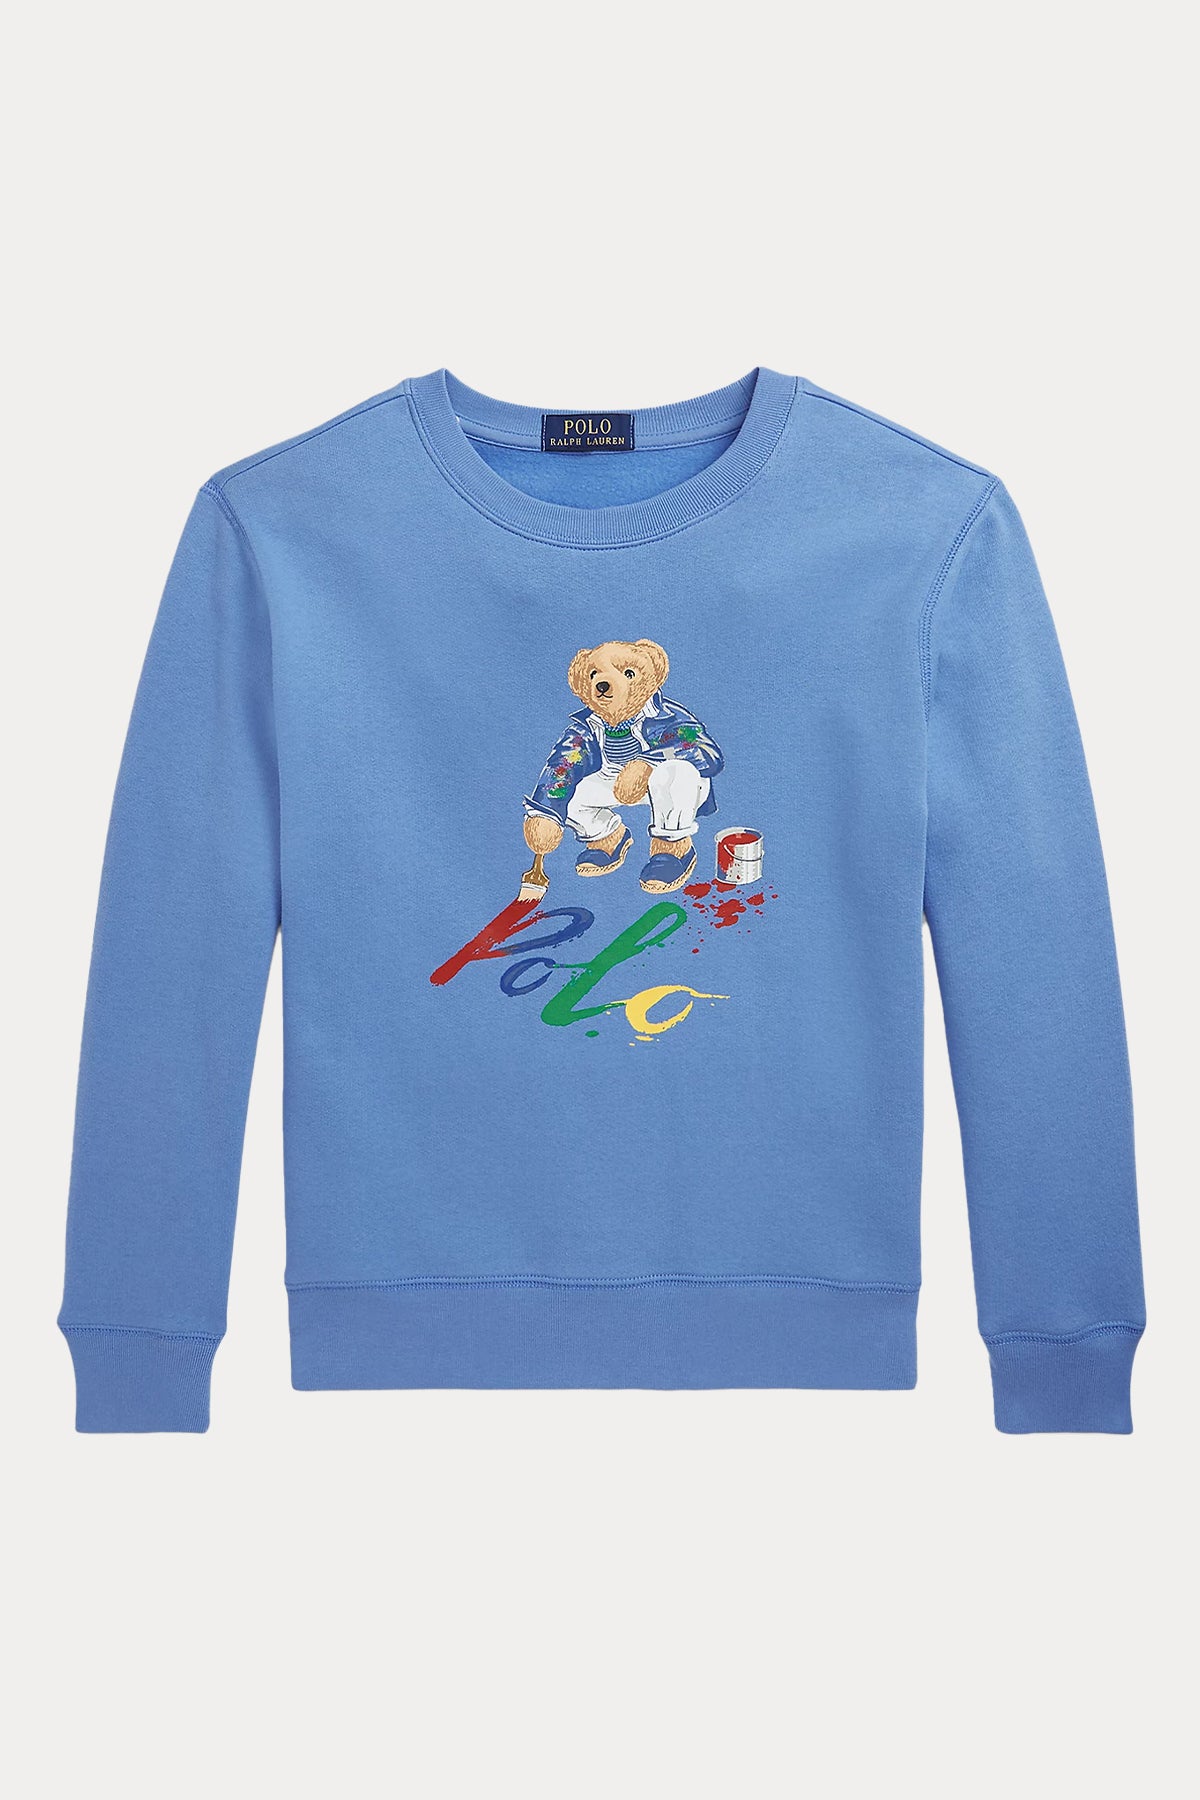 Polo Ralph Lauren Kids S-L Beden Unisex Çocuk Polo Bear Sweatshirt